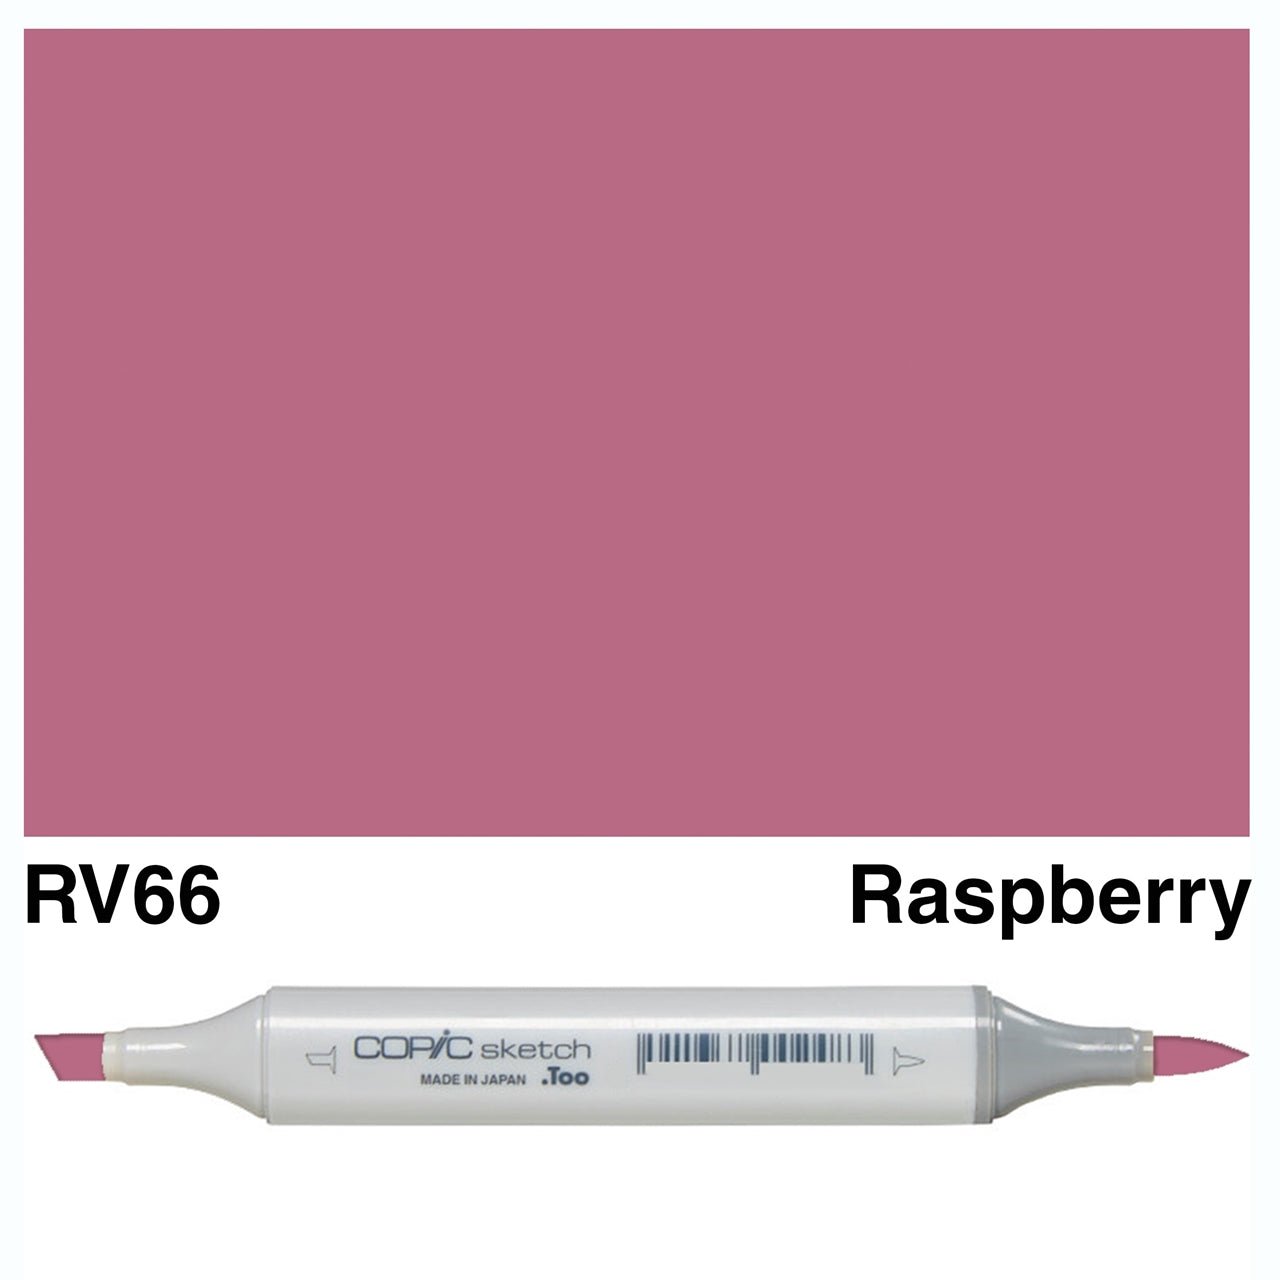 Copic Sketch RV66 Raspberry - theartshop.com.au